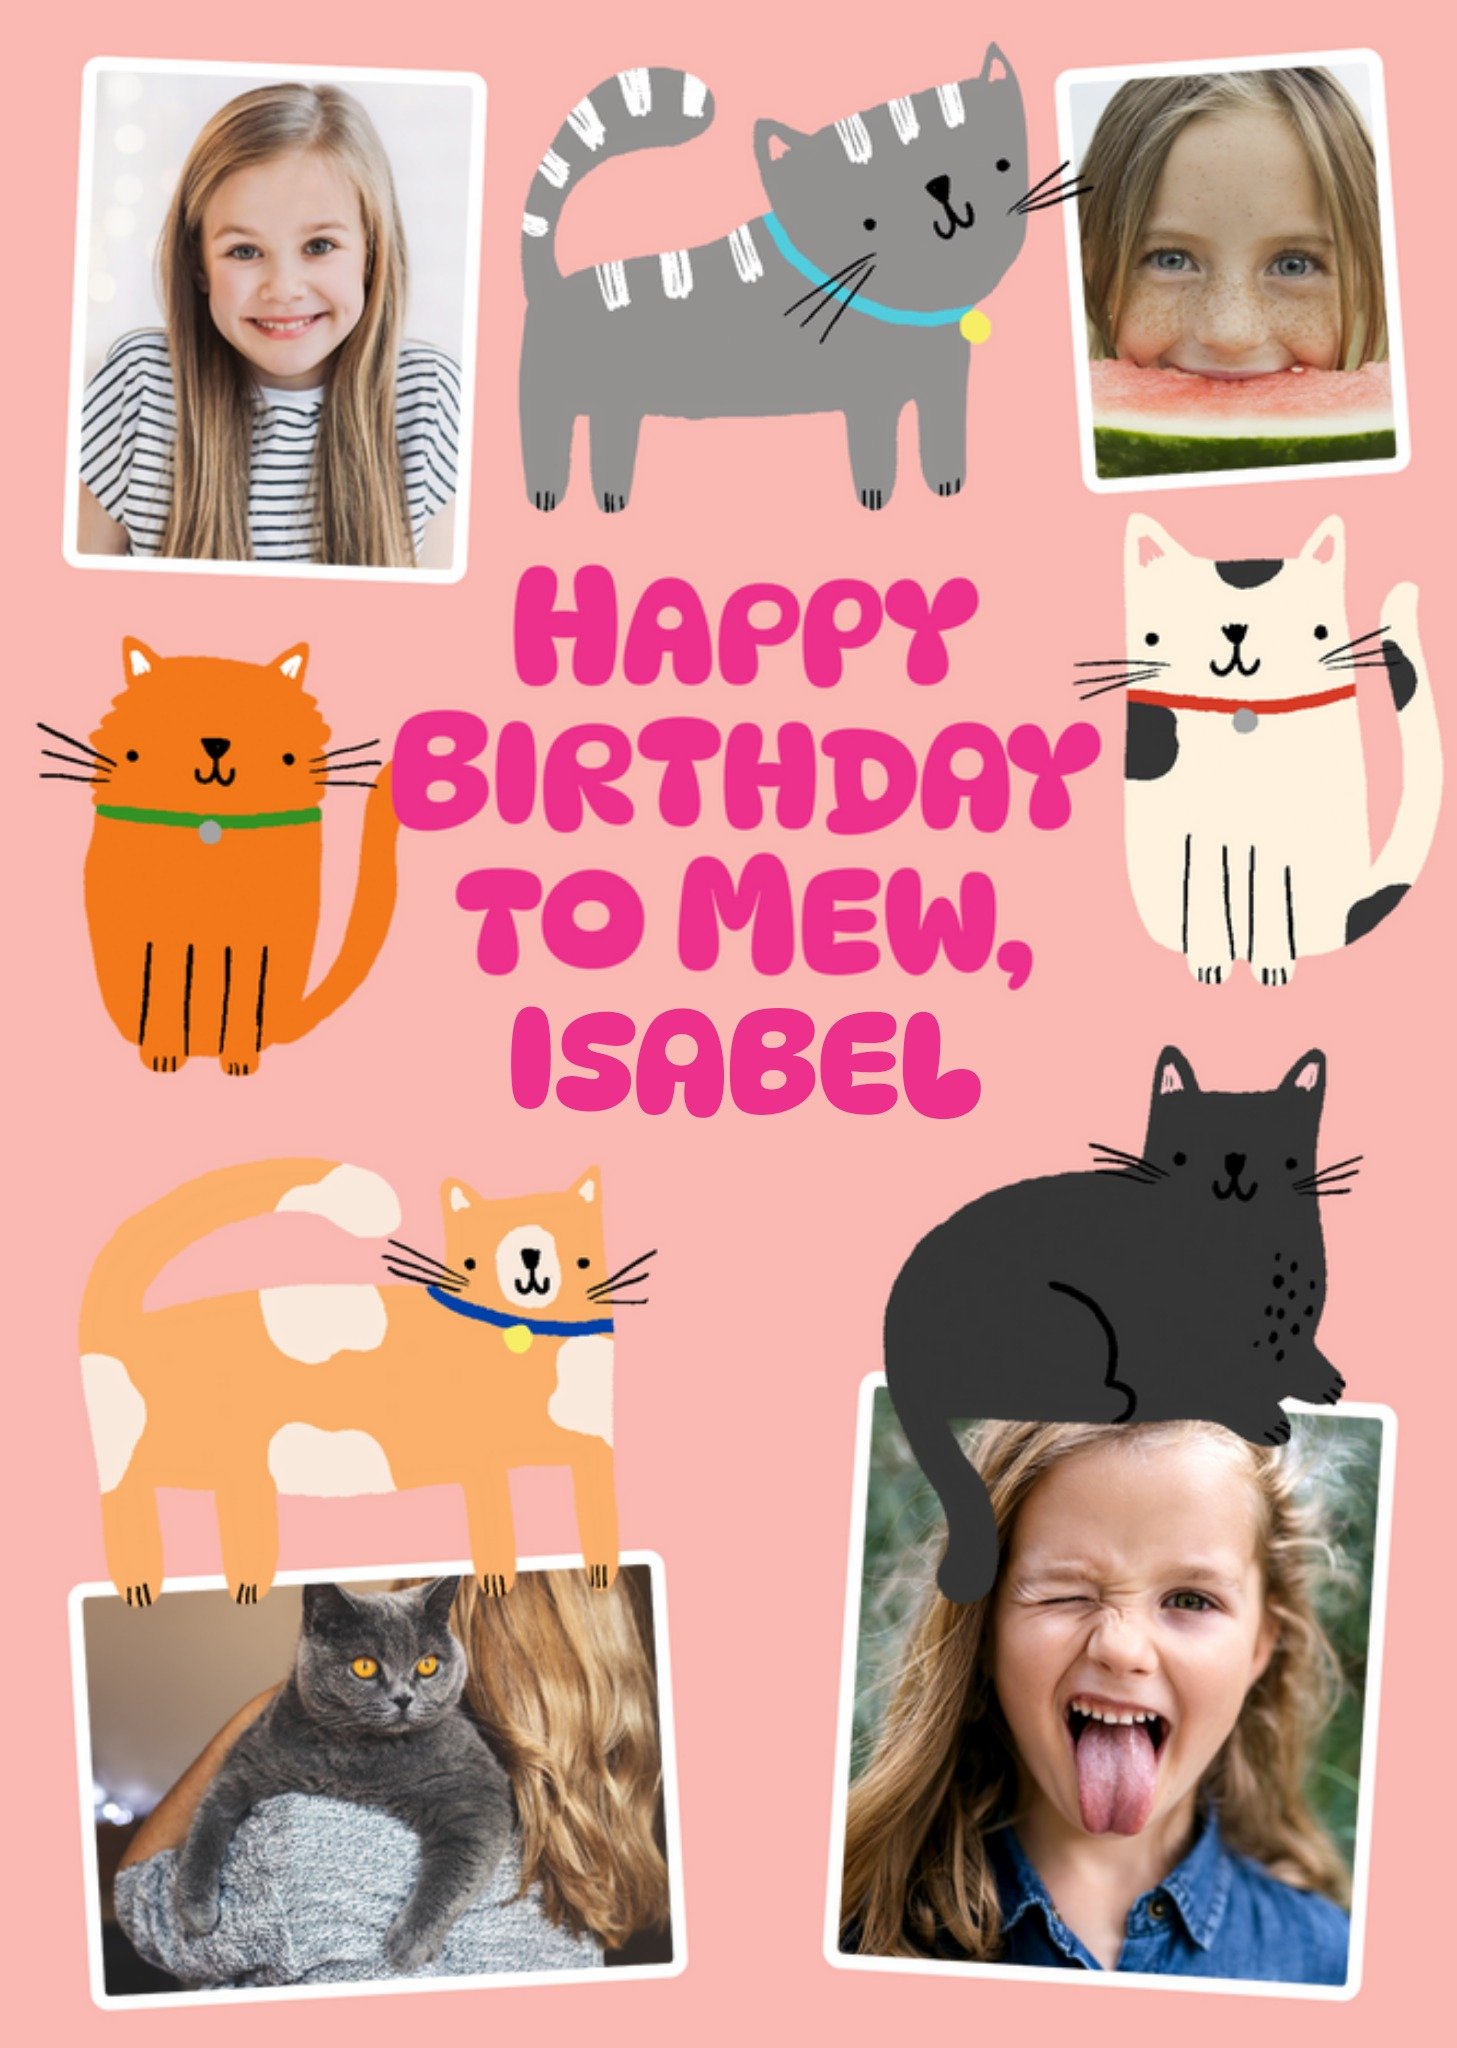 Moonpig Lisa Barlow Designs Happy Birthday To Mew Illustrated Cats Photo Upload Birthday Card, Large